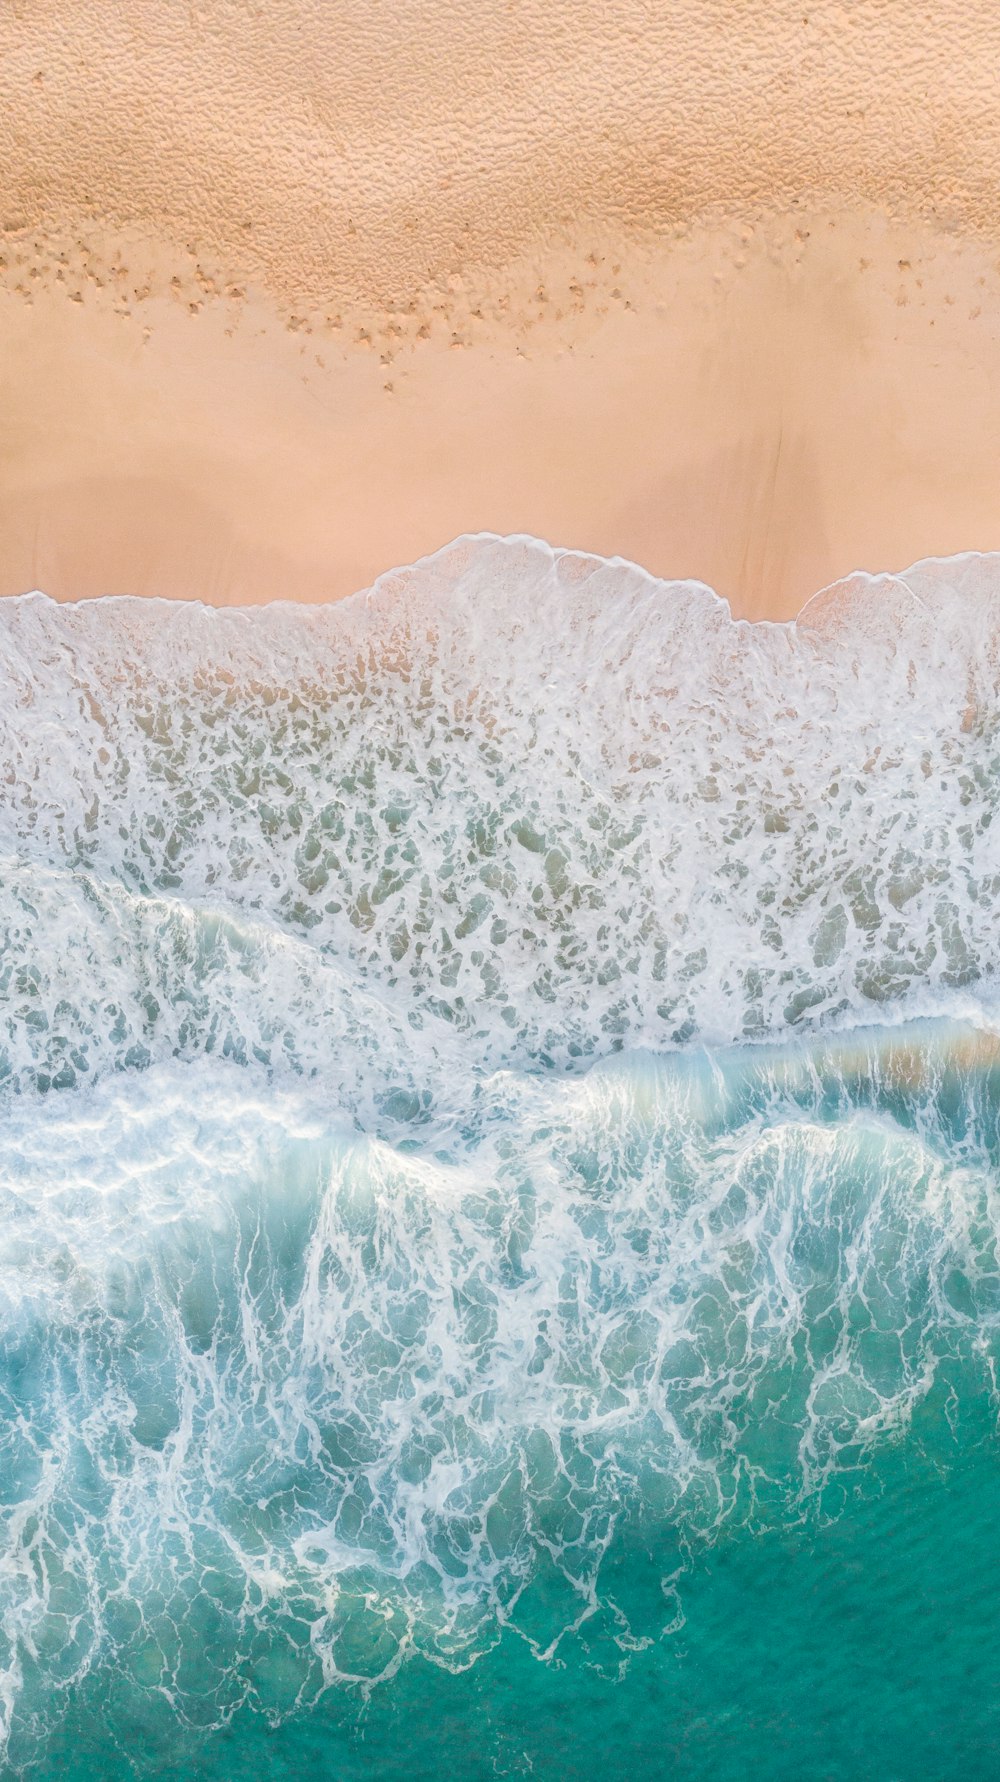 aerial photography of waves splashing on white sand beach